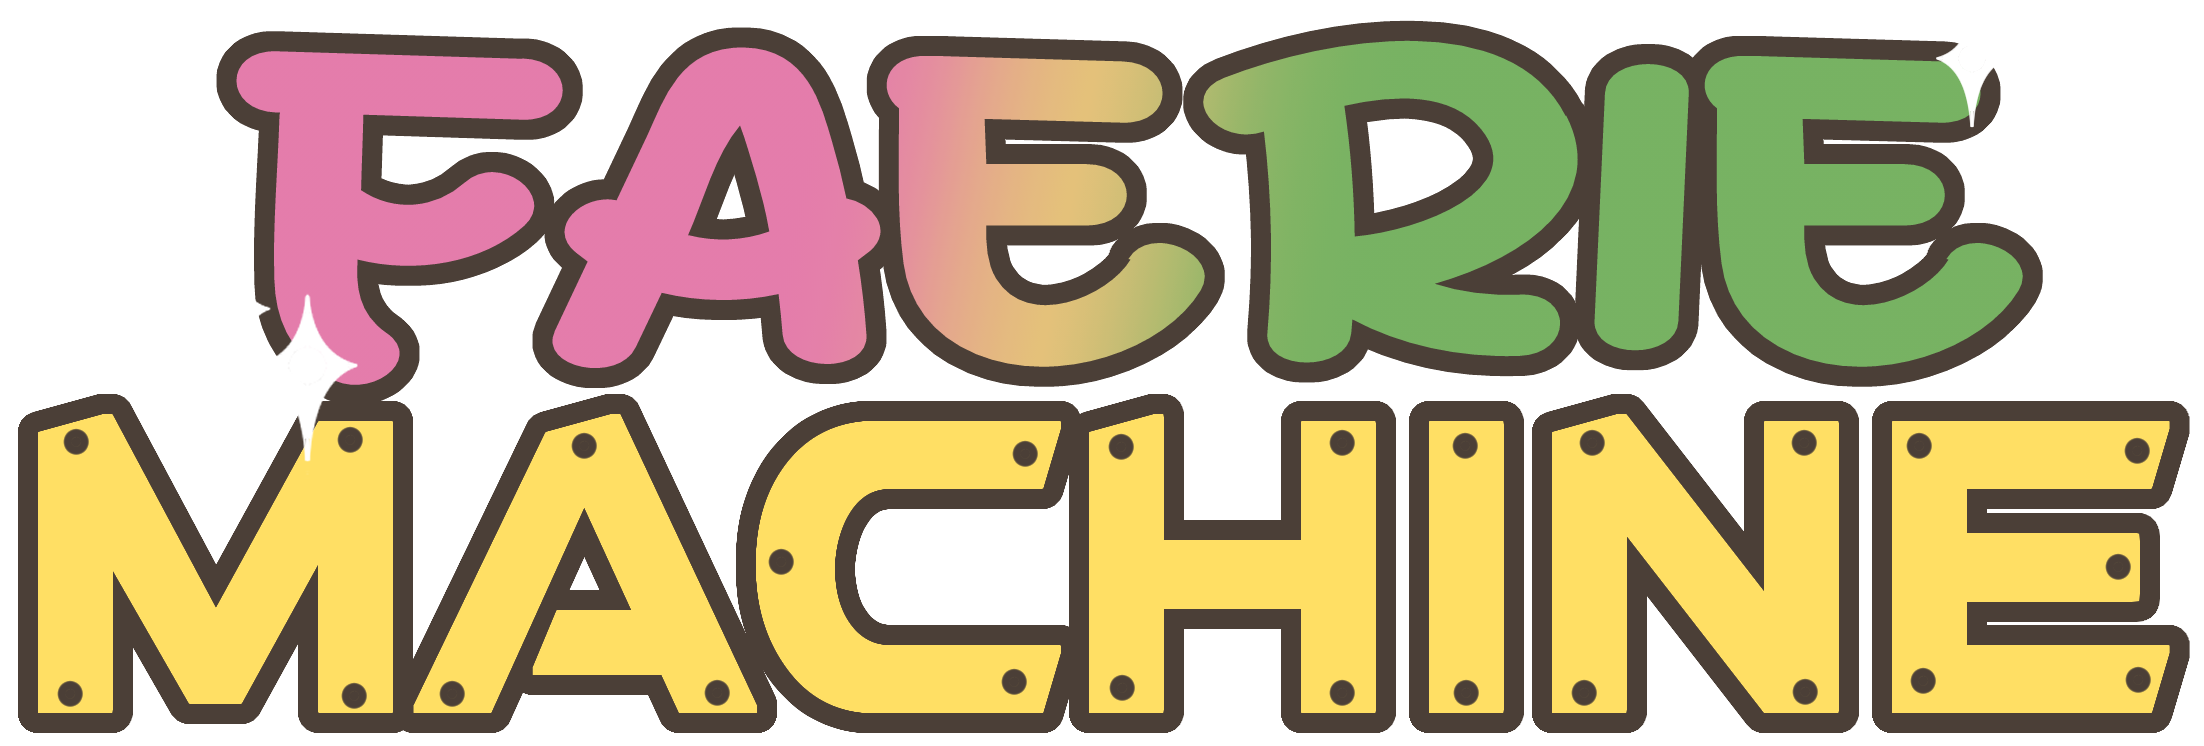 FaerieMachine logo